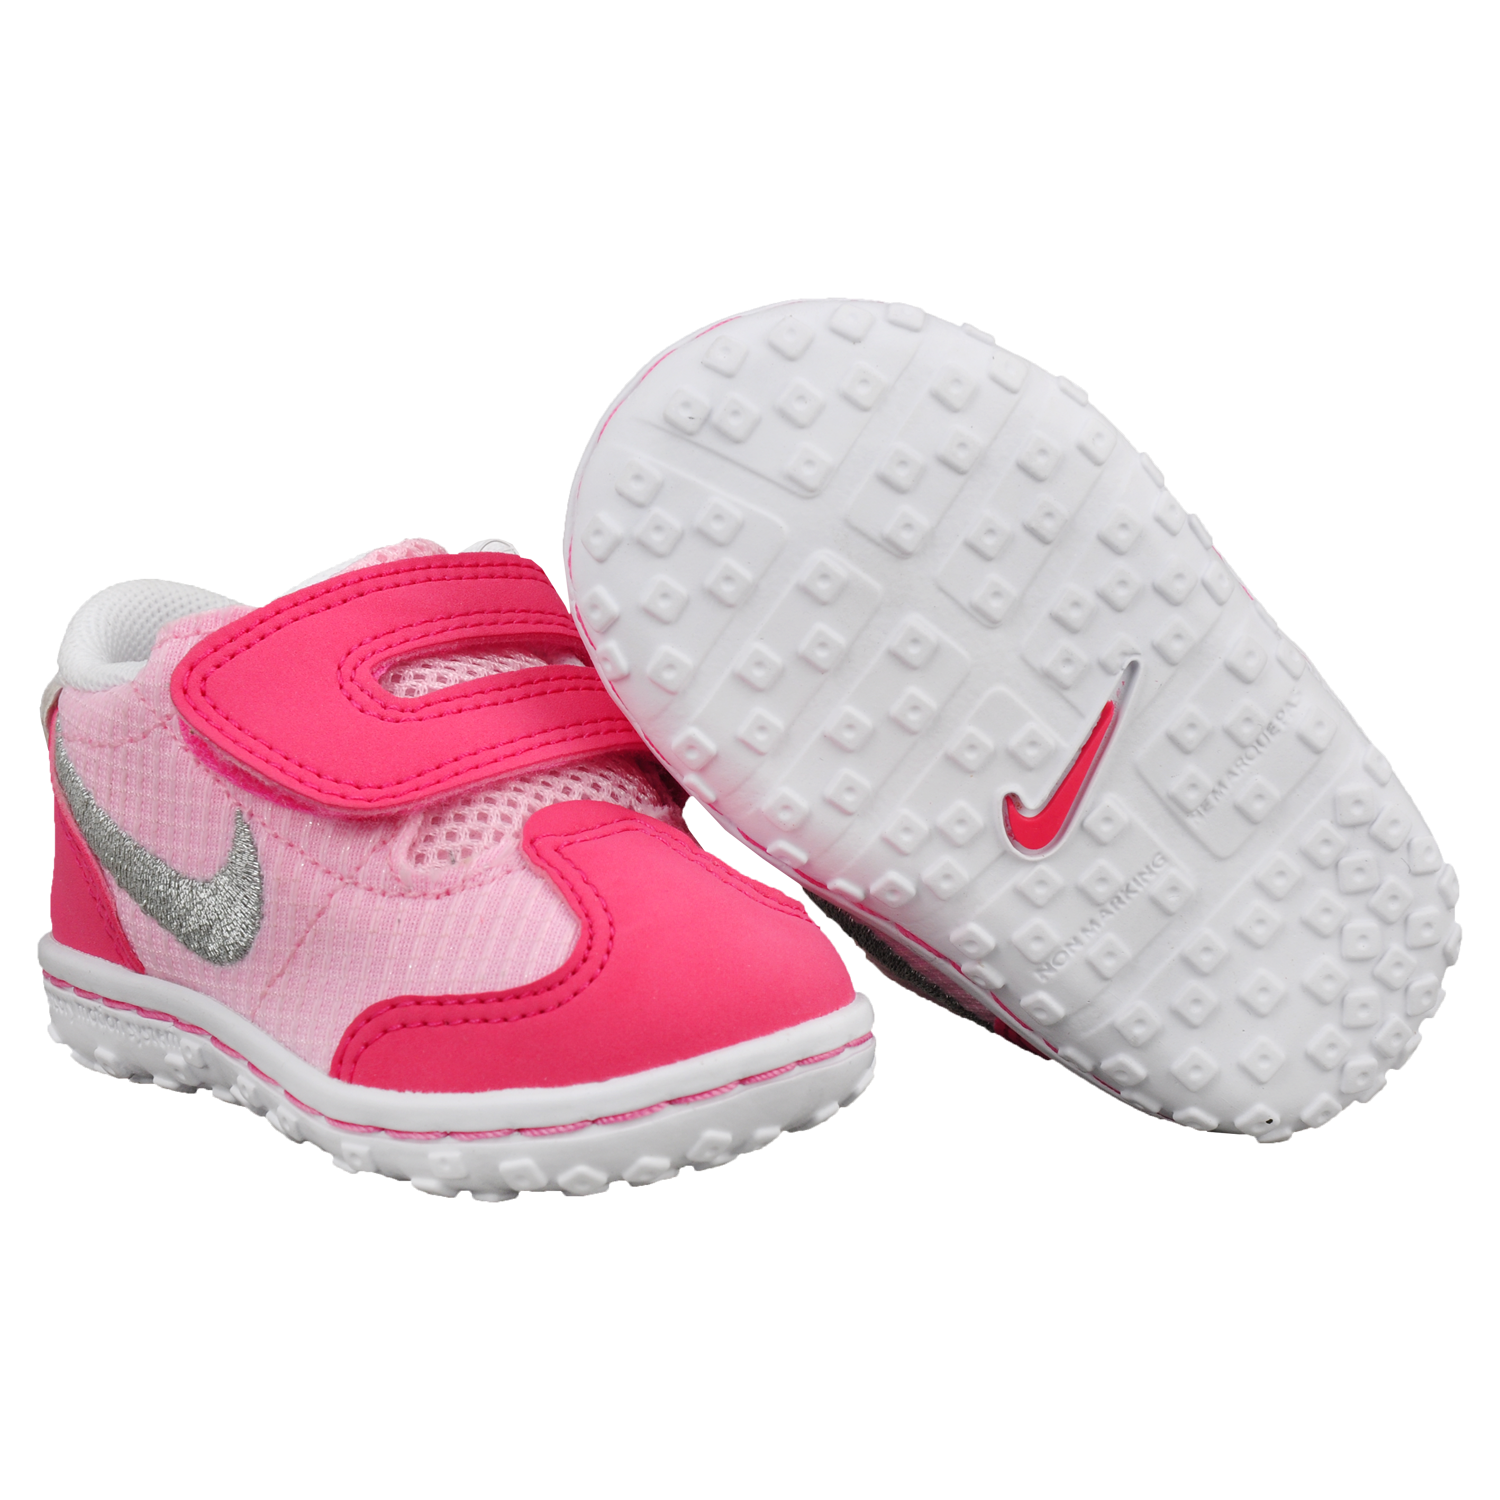 Foto Nike Shoe Sms Roadrunner 2 (tdv) Zapatos De Bebé Rosa foto 940769